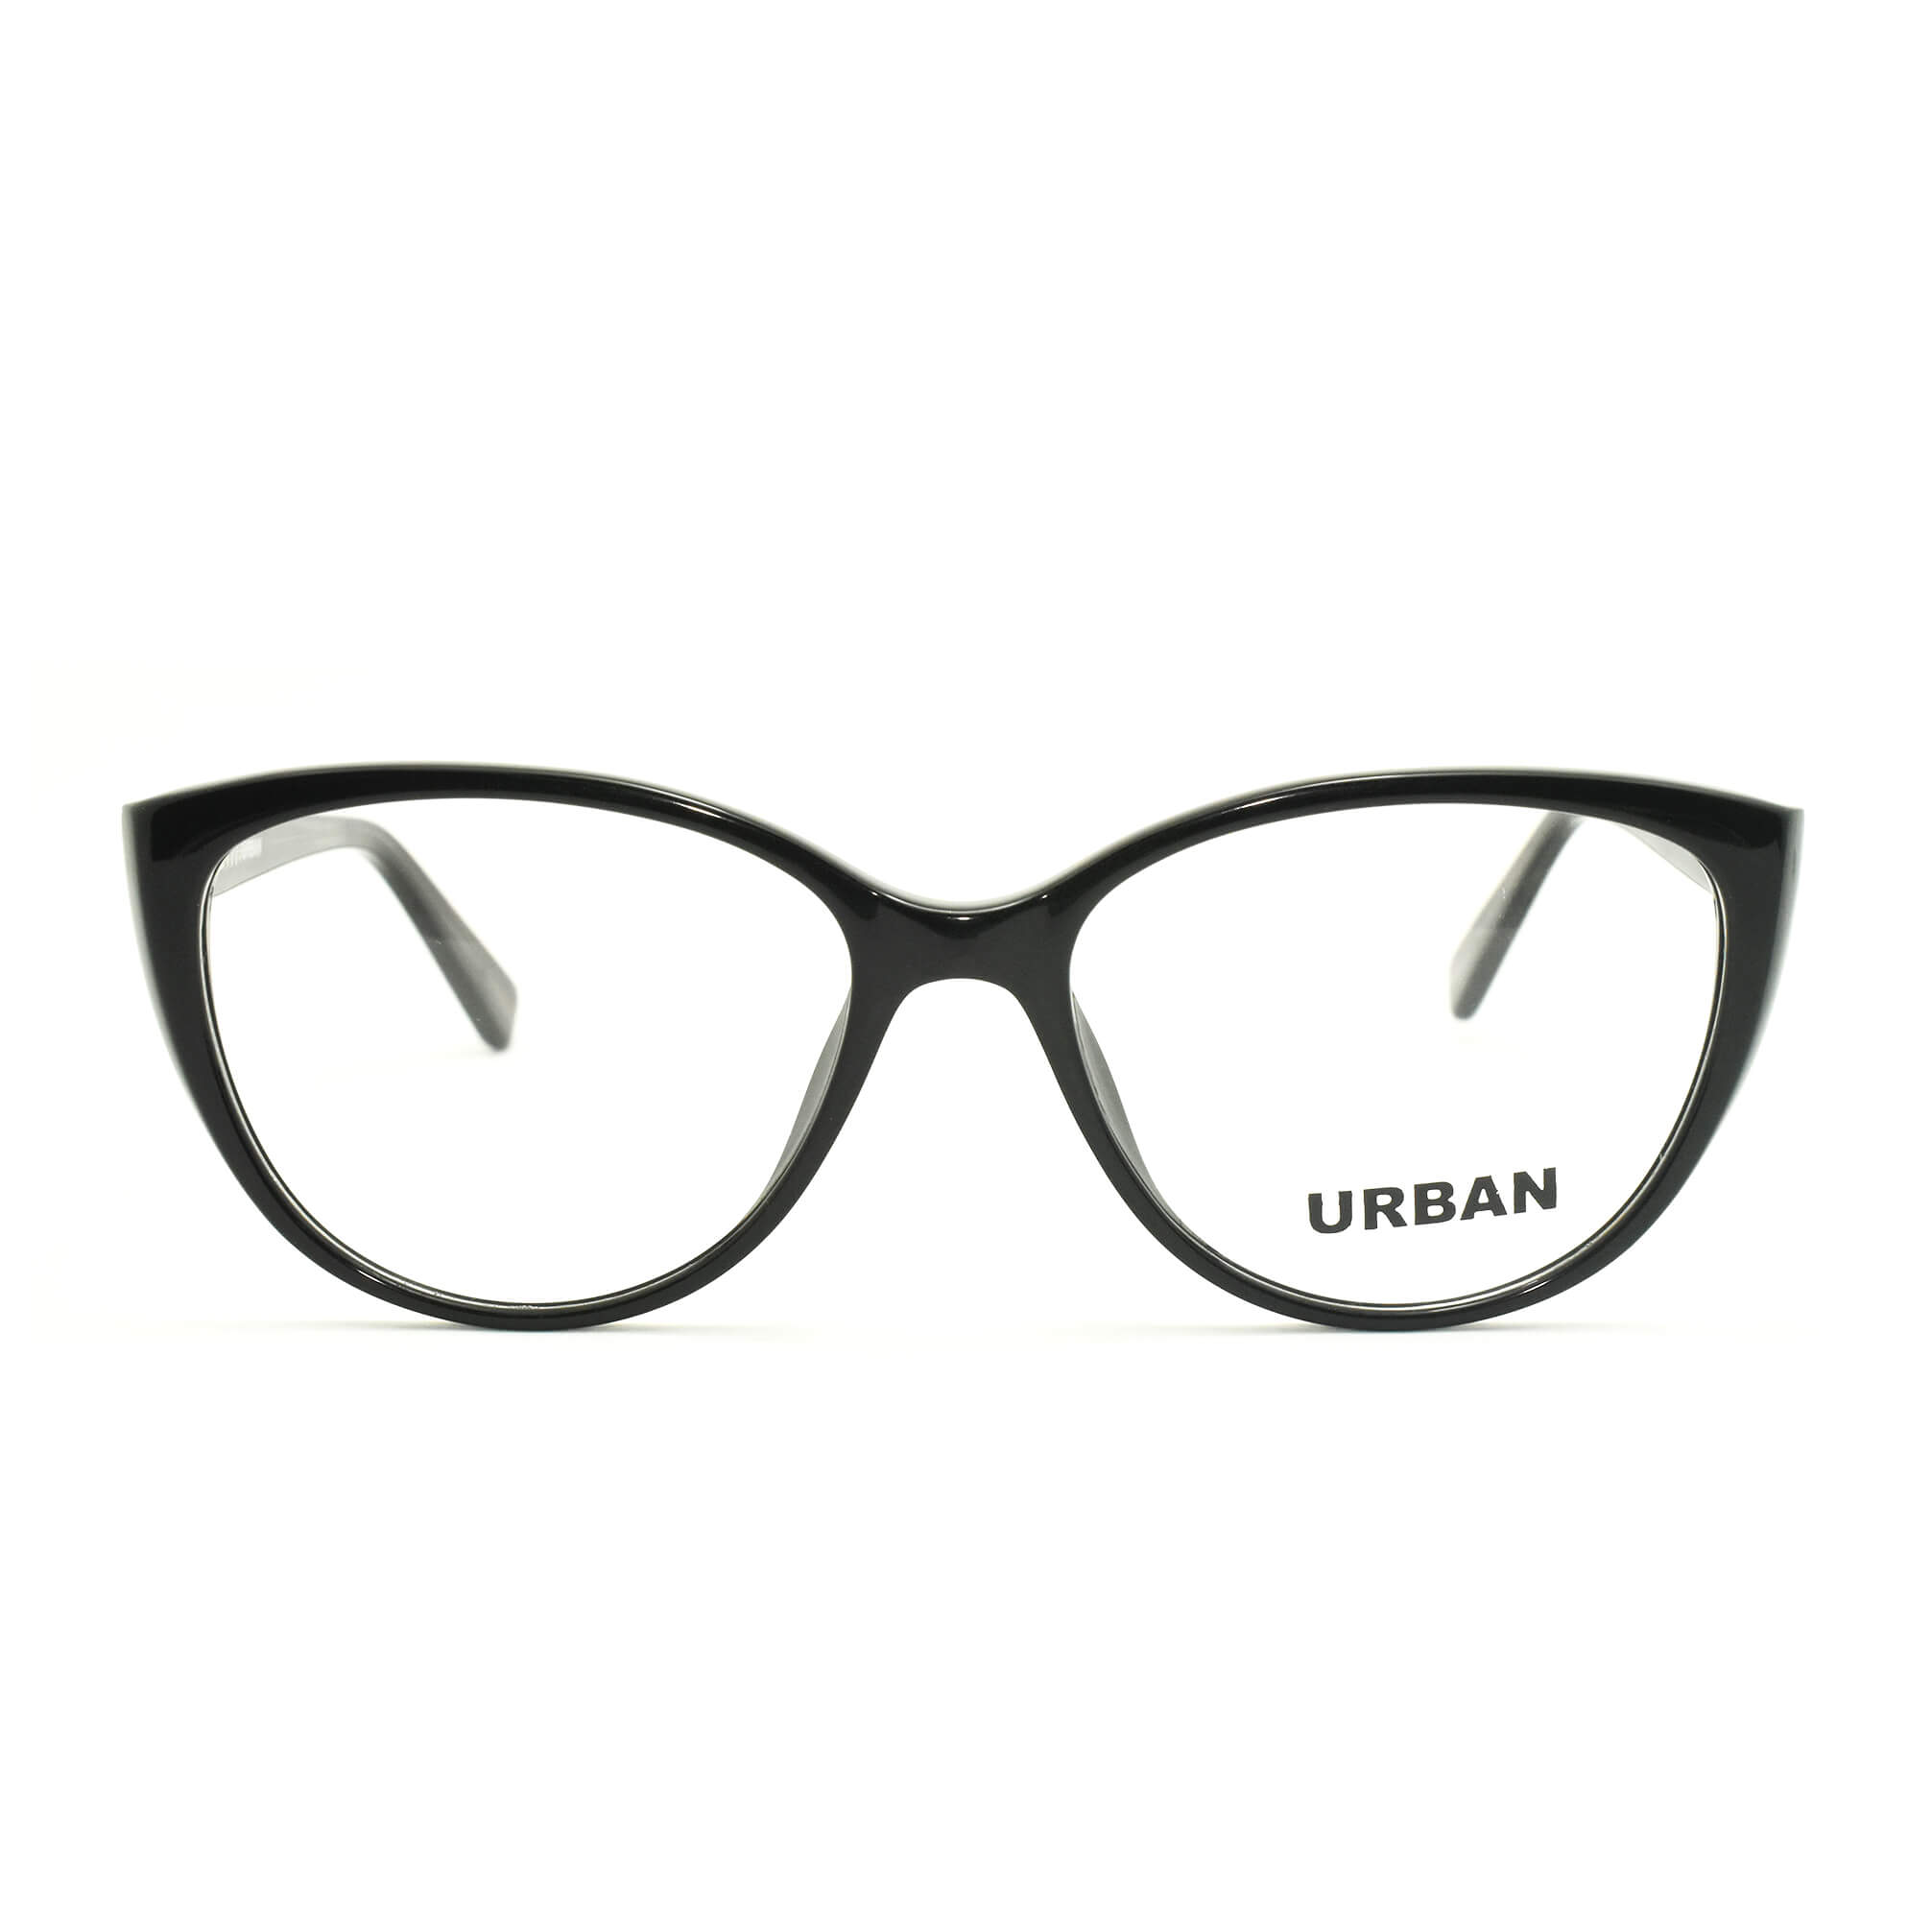 Urban LS8061 C1 Need description - Sarabia Optical